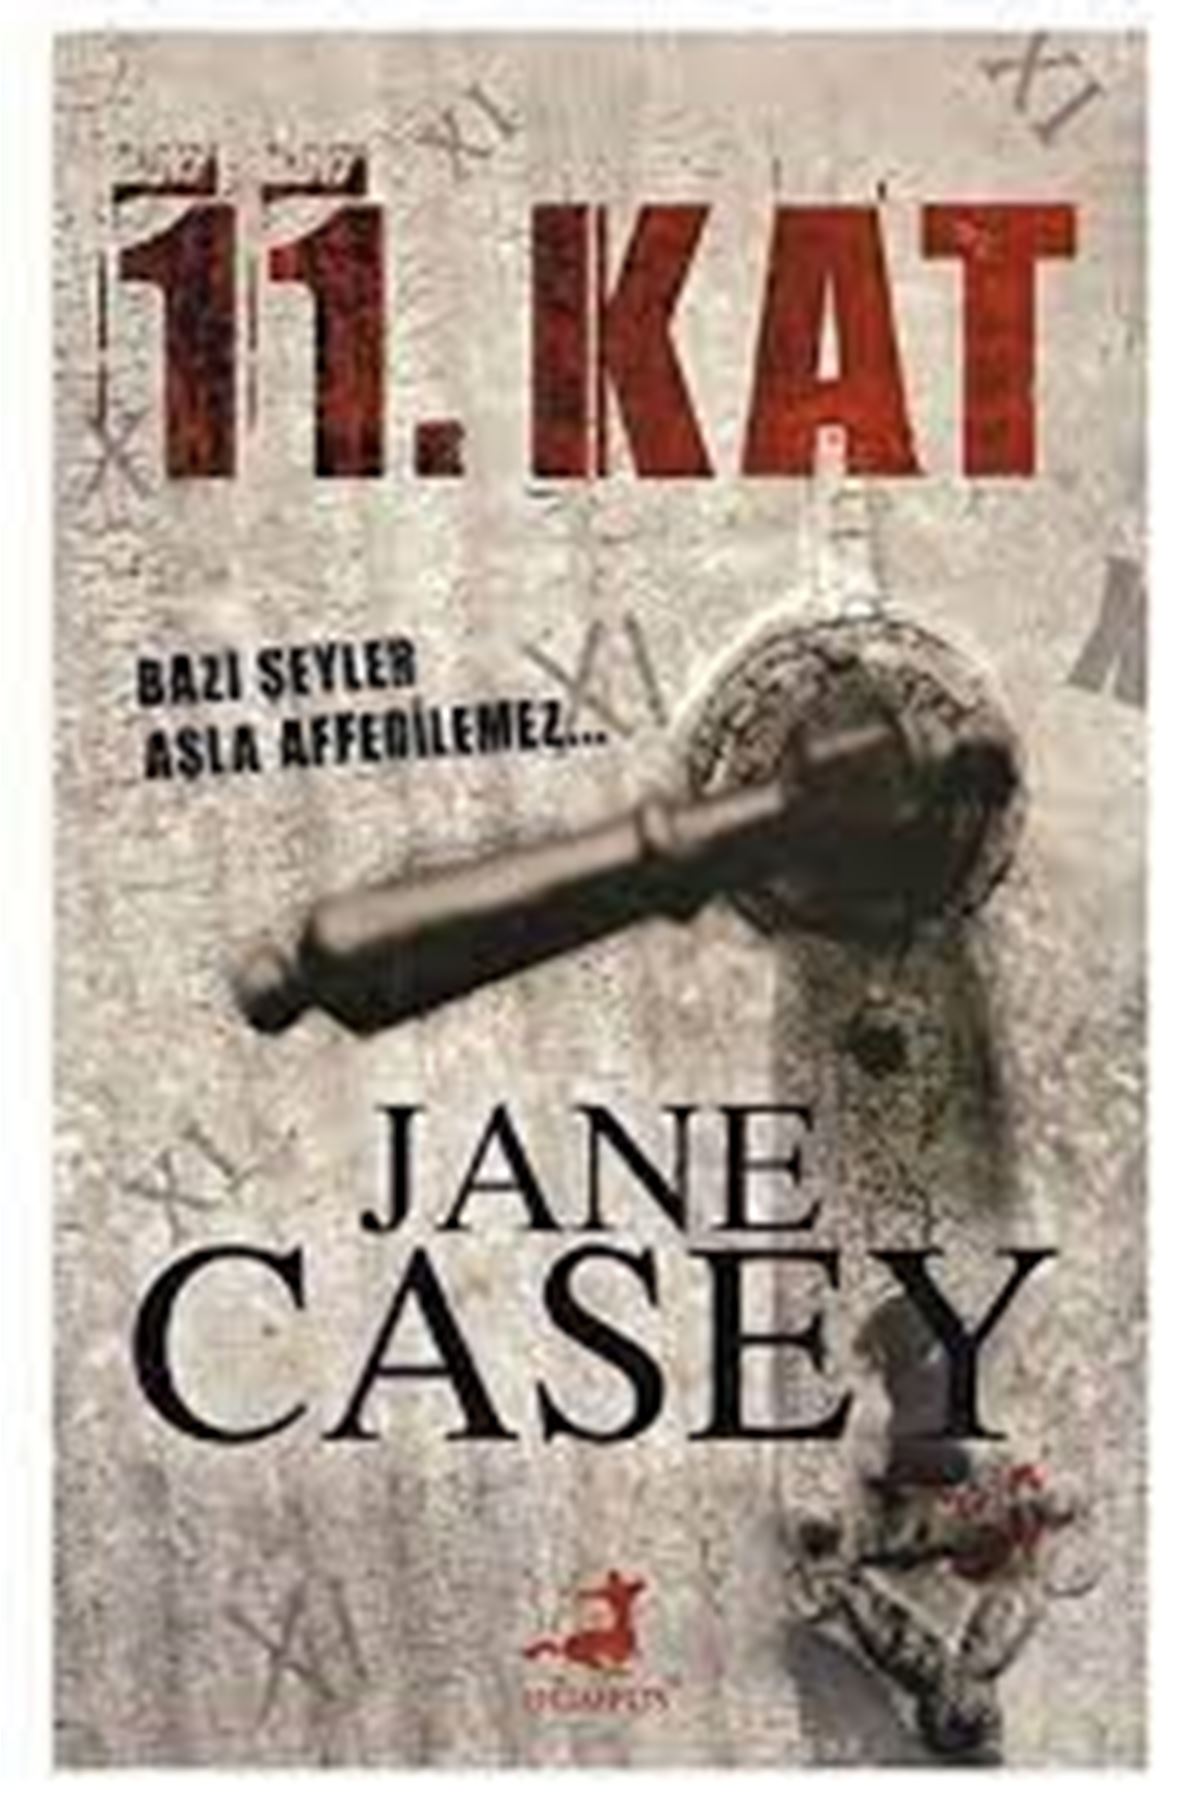 JANE CASEY - 11.KAT